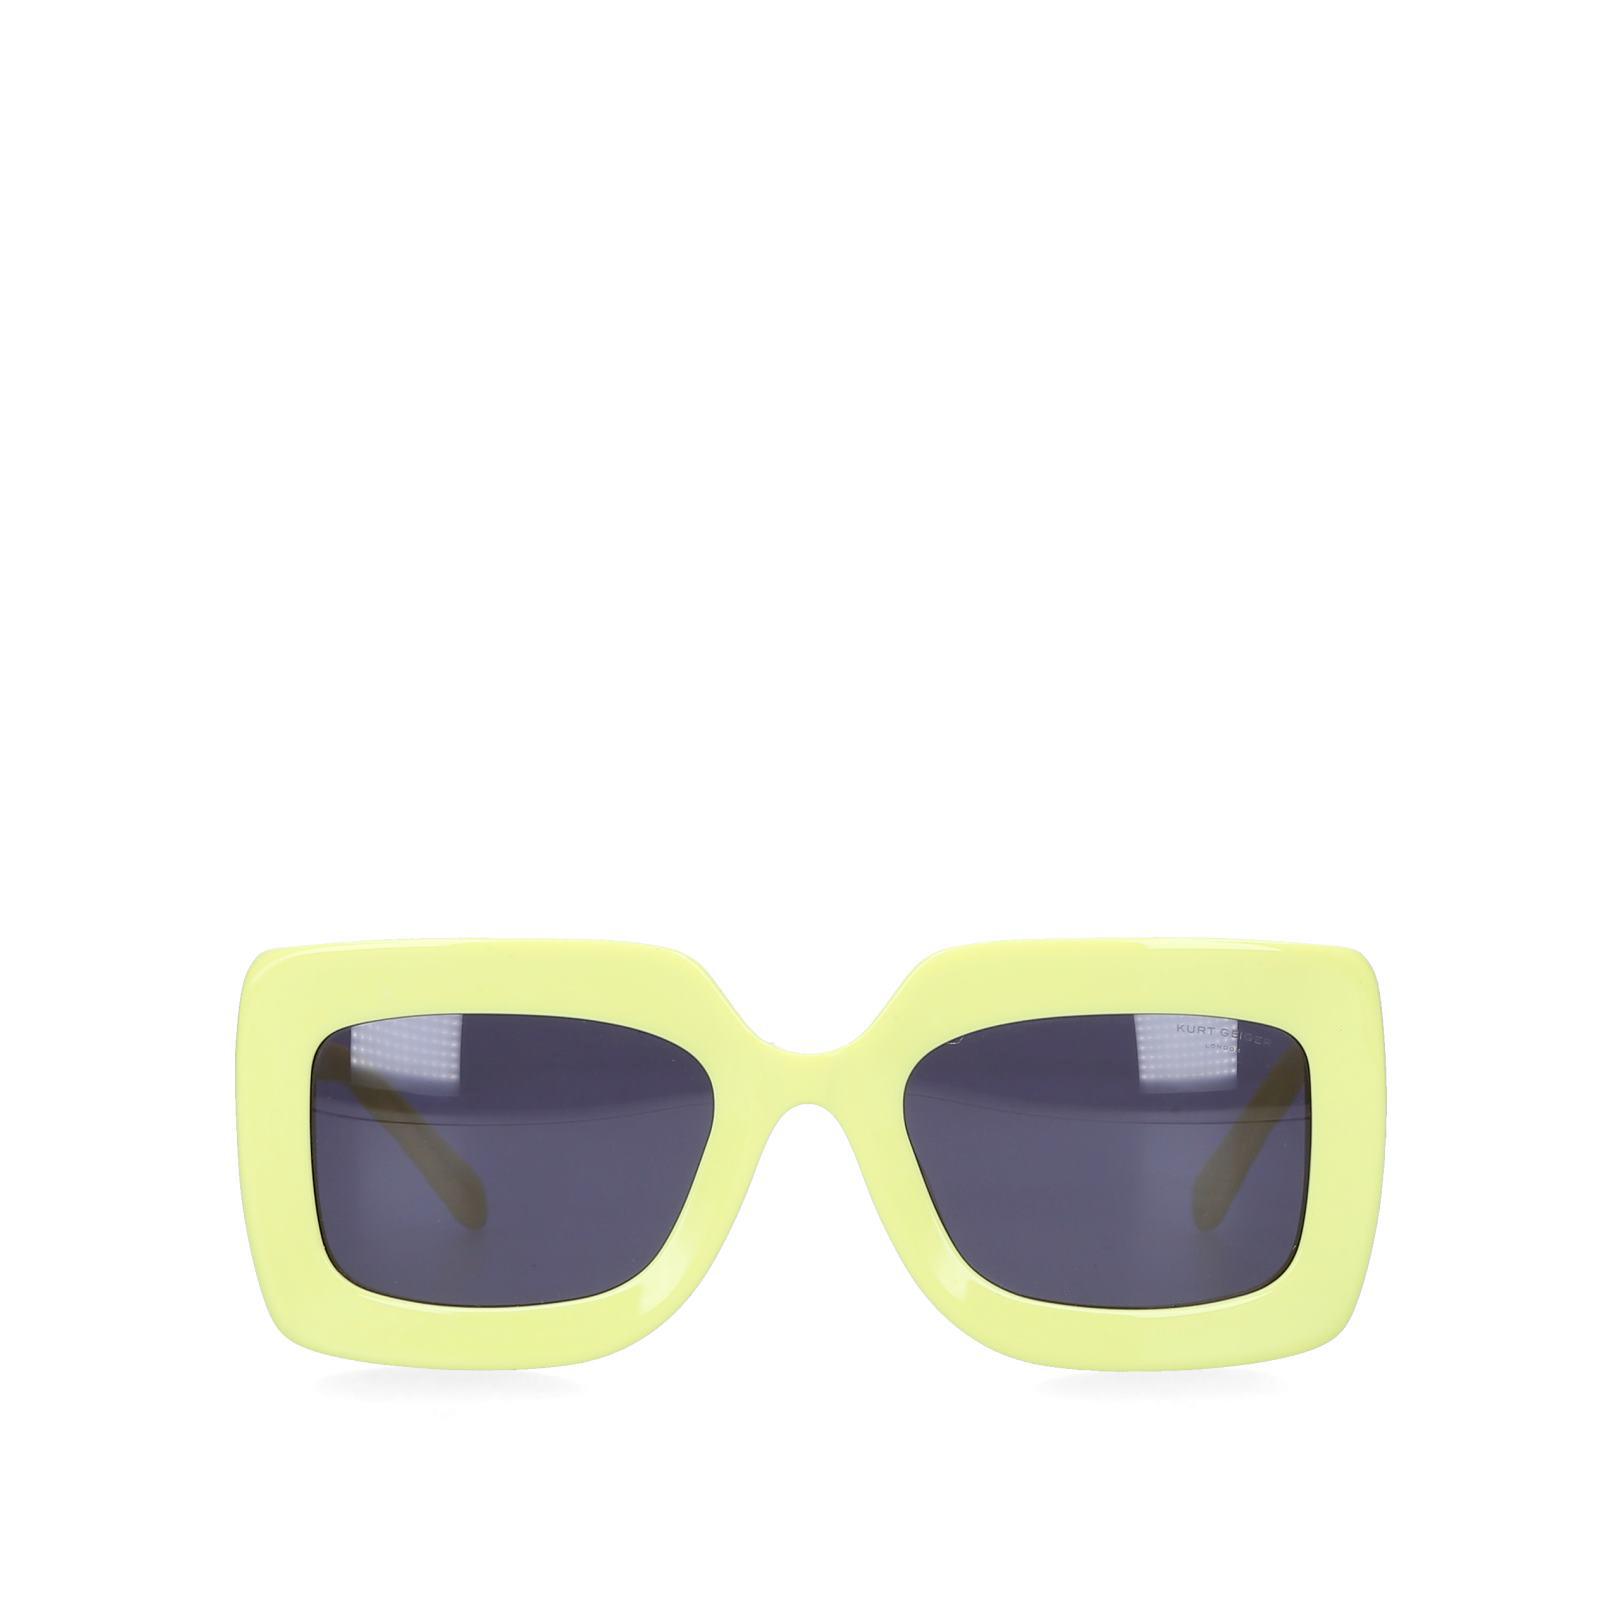 KENSINGTON SUNGLASSES Neon Yellow Acetate Quilted Sunglasses  by KURT GEIGER LONDON